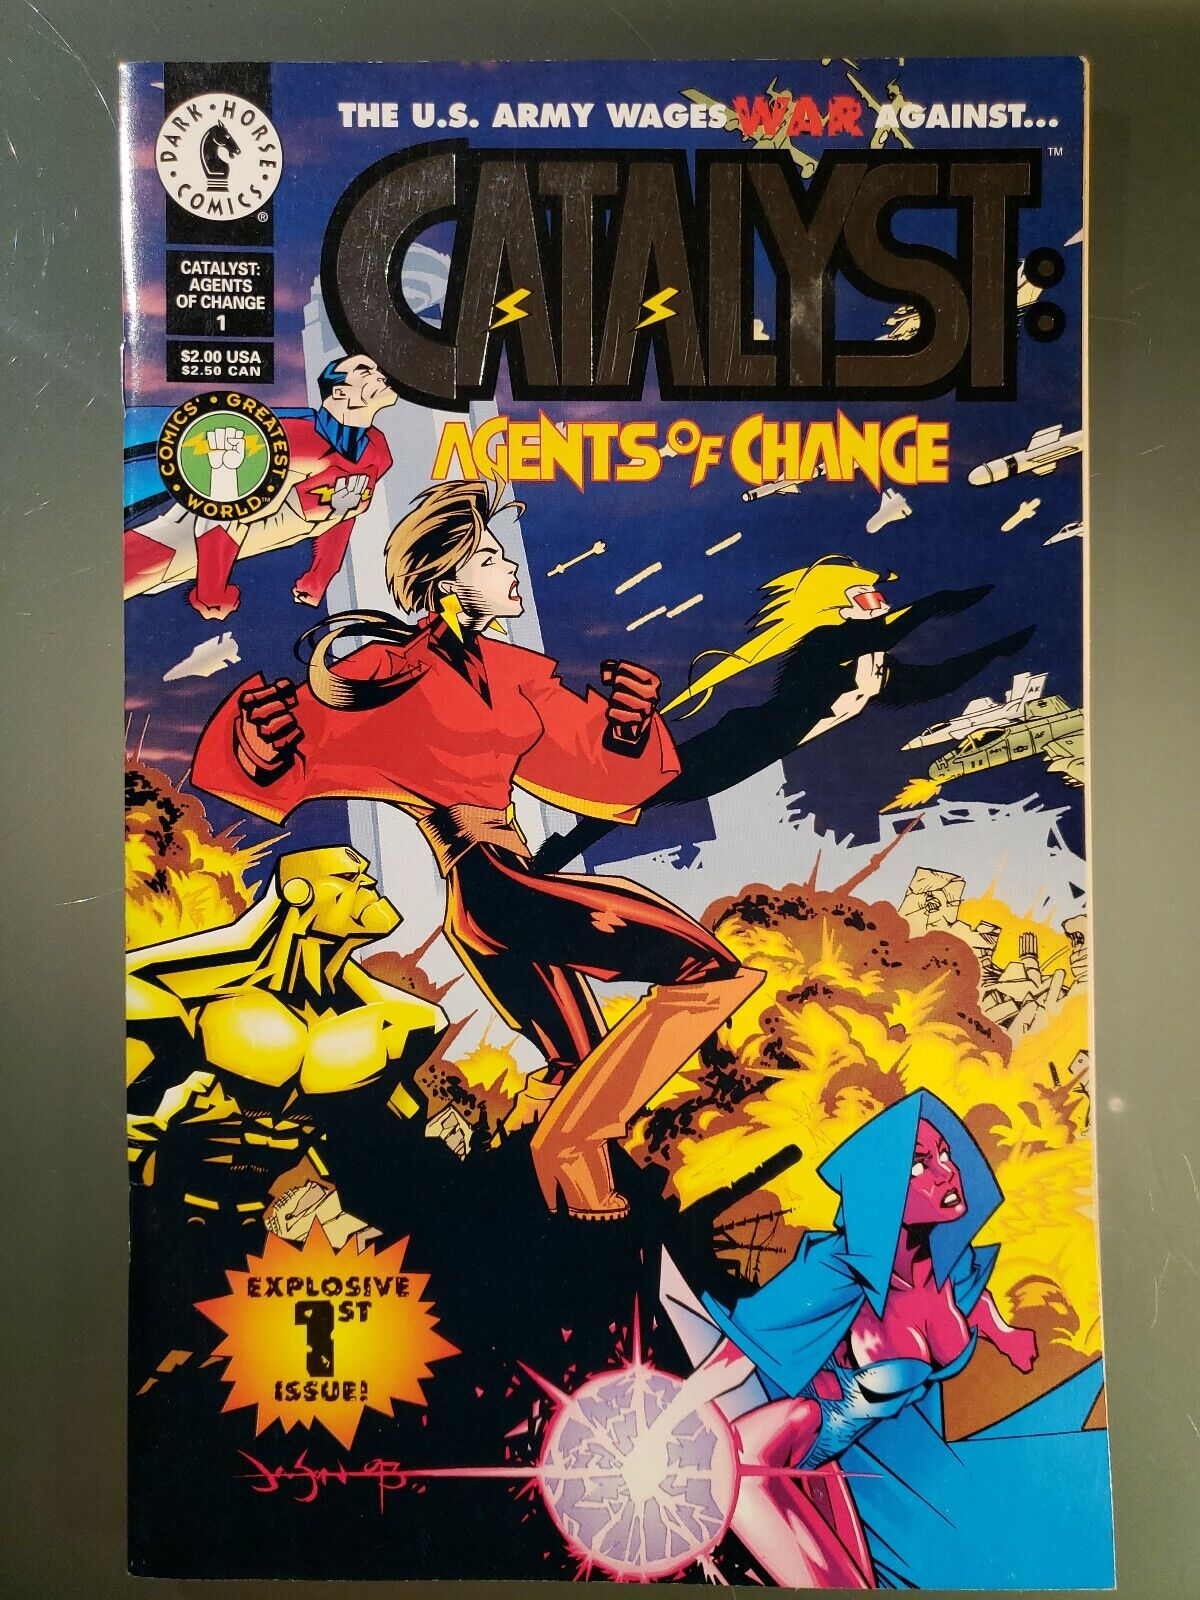 Catalyst: Agents Of Change #1(1994 Feb, Dark Horse)